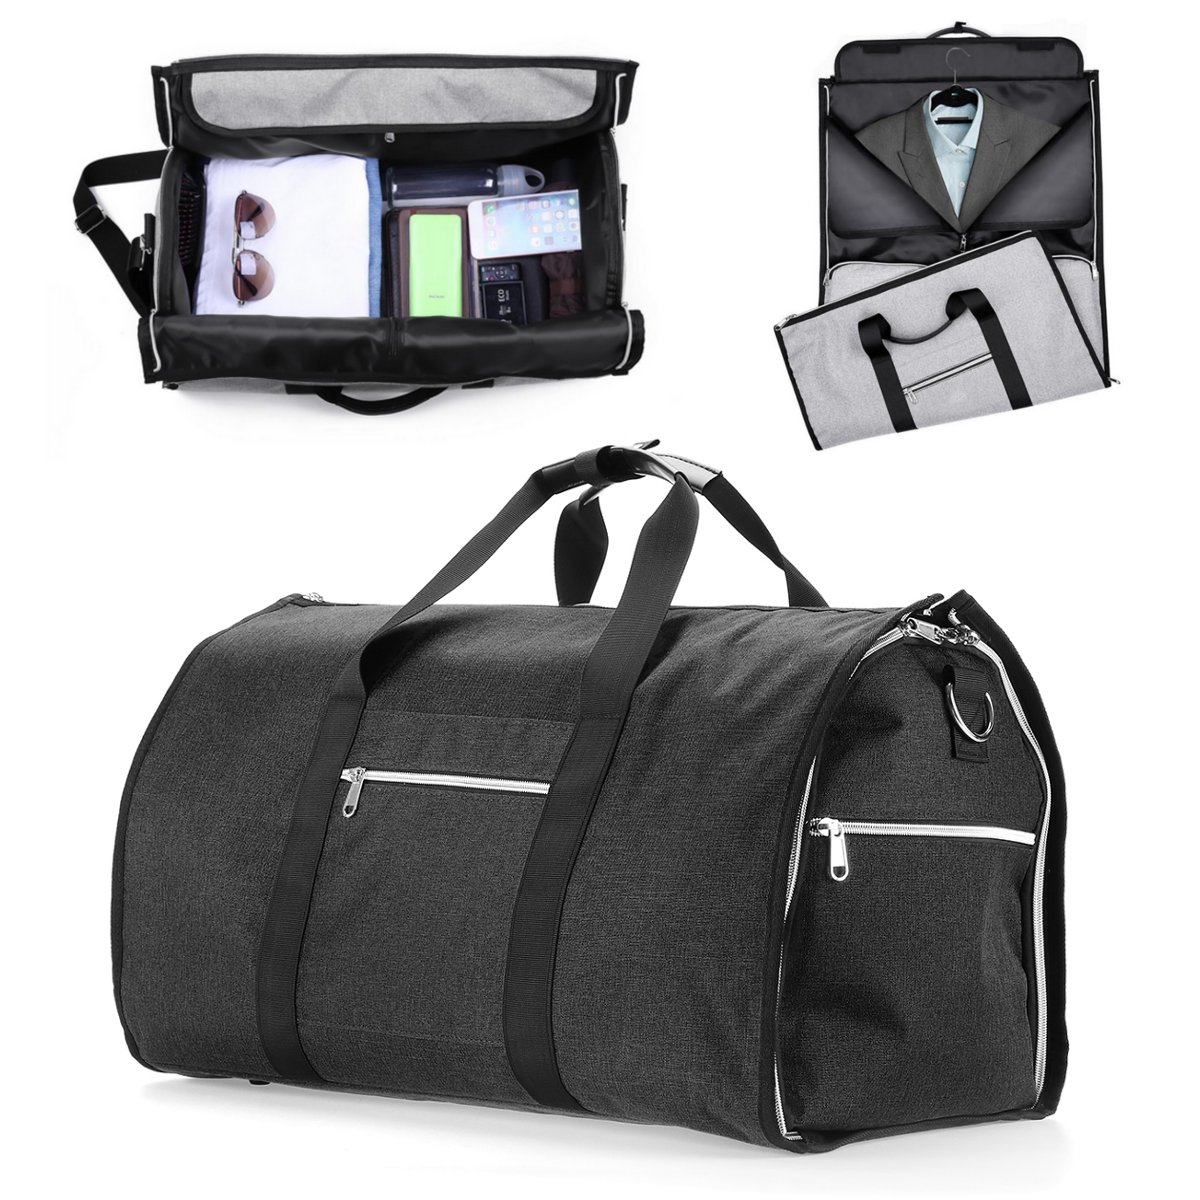 47L-Outdoor-Portable-Travel-Luggage-Bag-Suit-Dress-Garment-Storage-Handbag-Sports-Gym-Bag-1553950-5